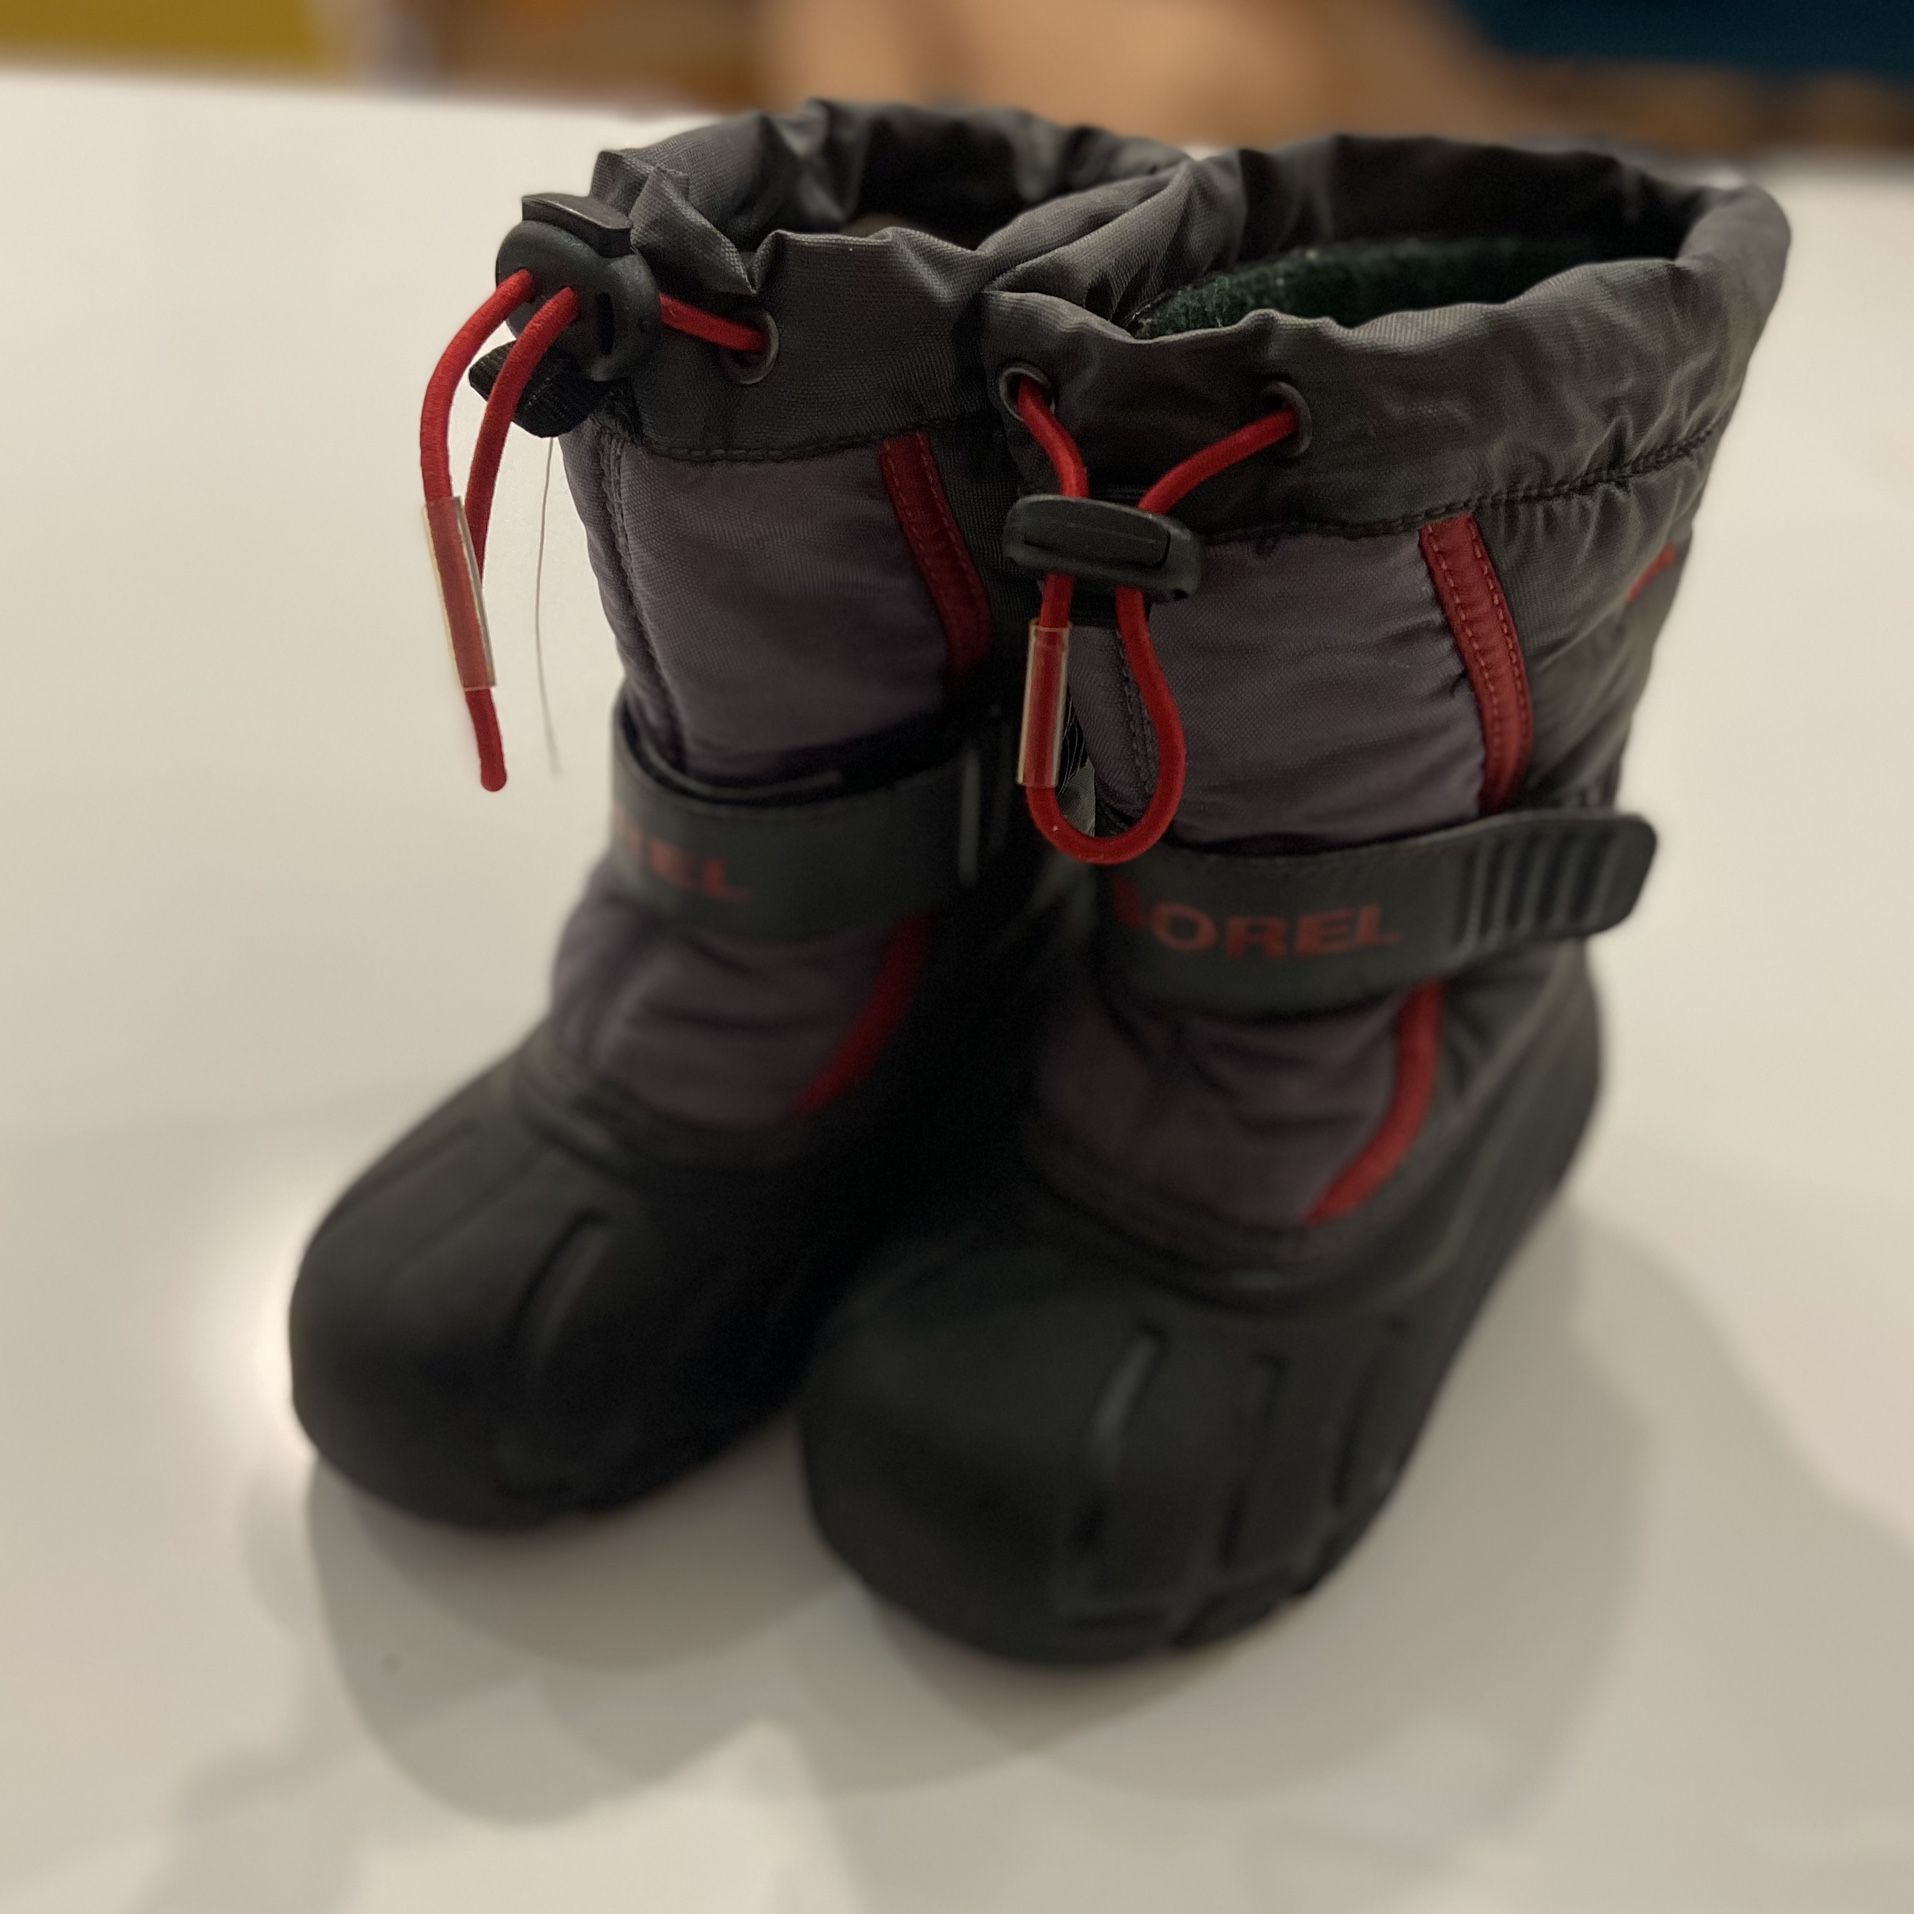 Sorel Children’s Snow Boots 